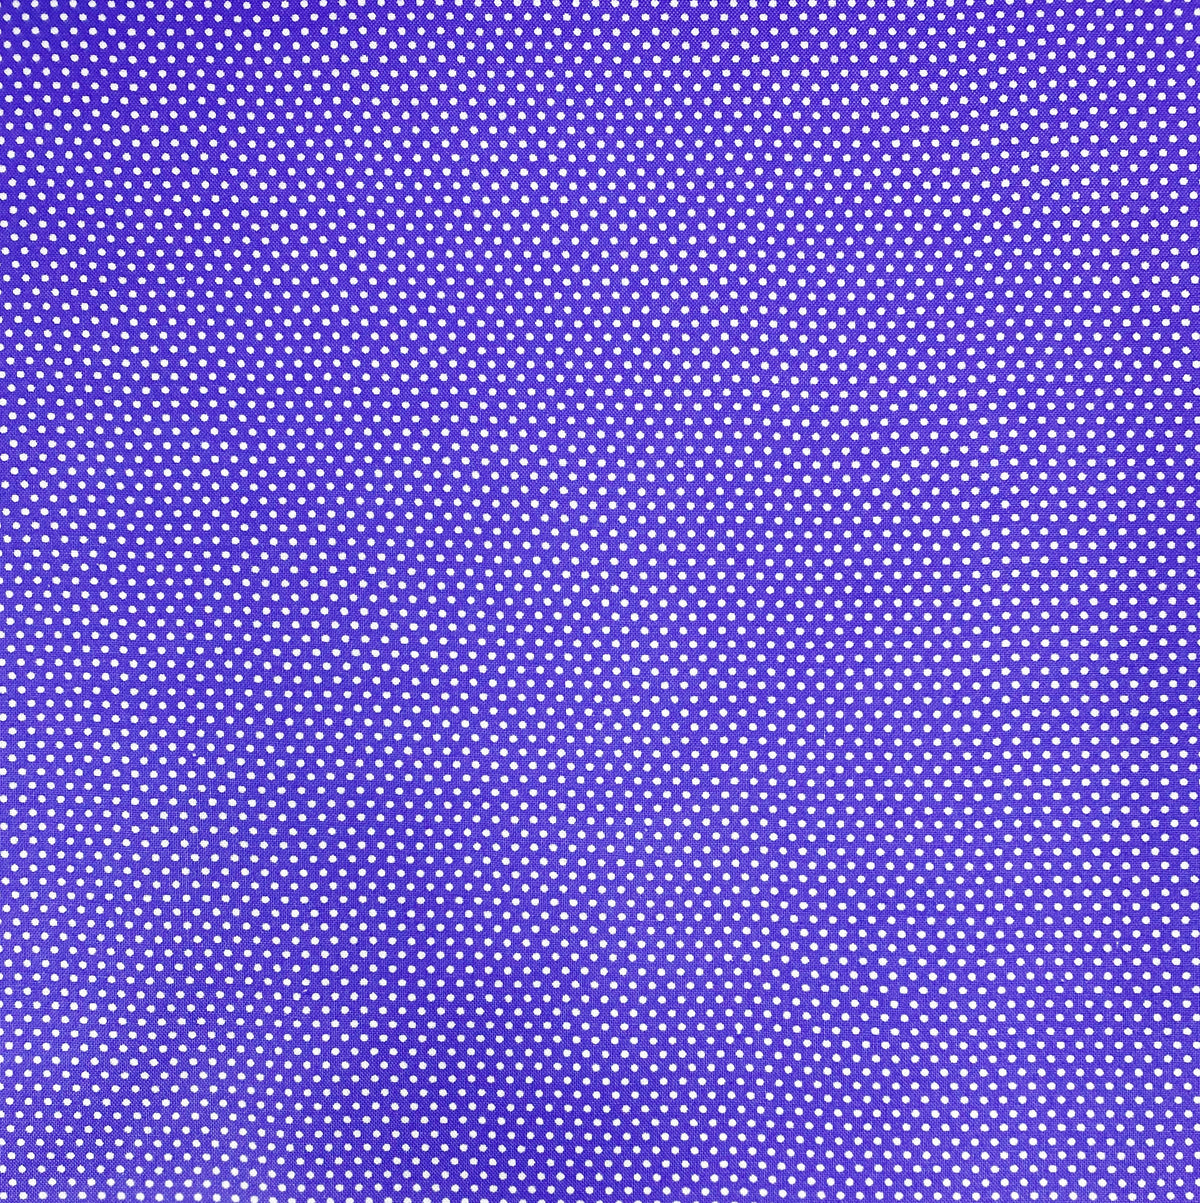 Pin Dot in Purple | Back to Basics | RJR Fabrics